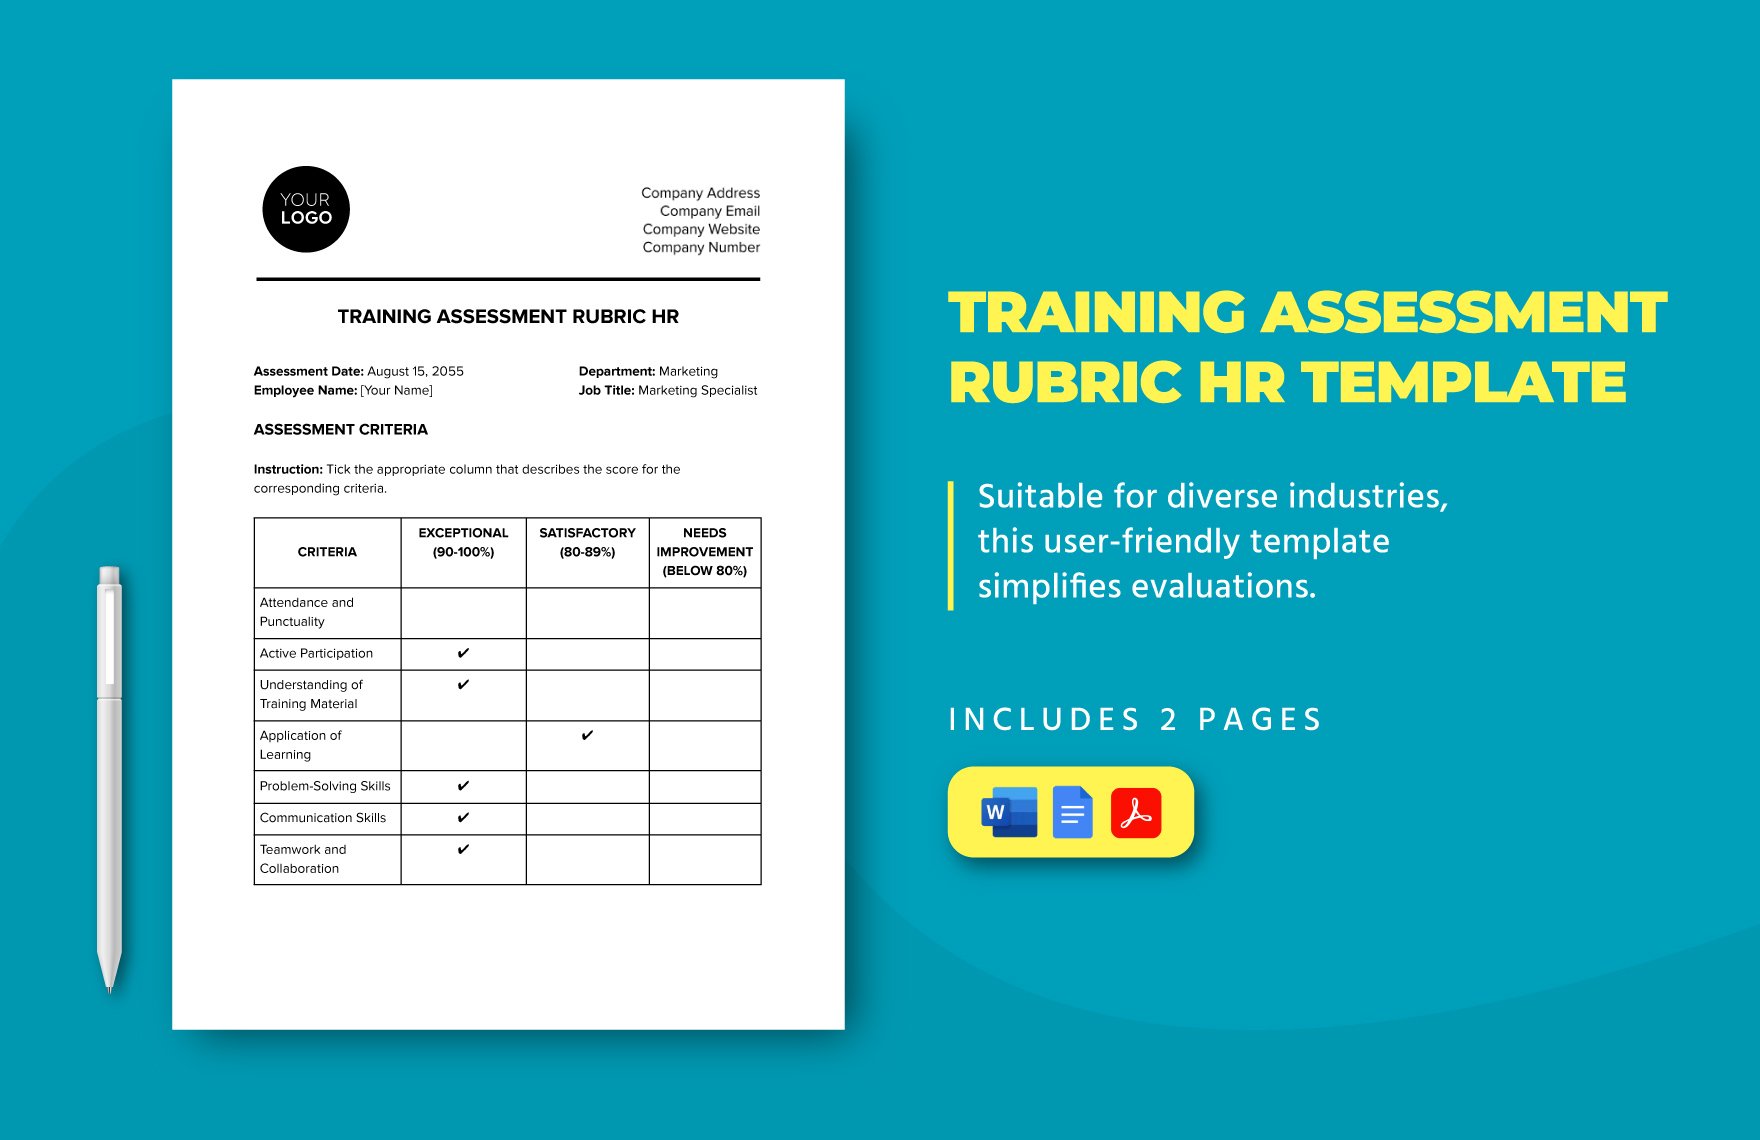 Training Assessment Rubric HR Template